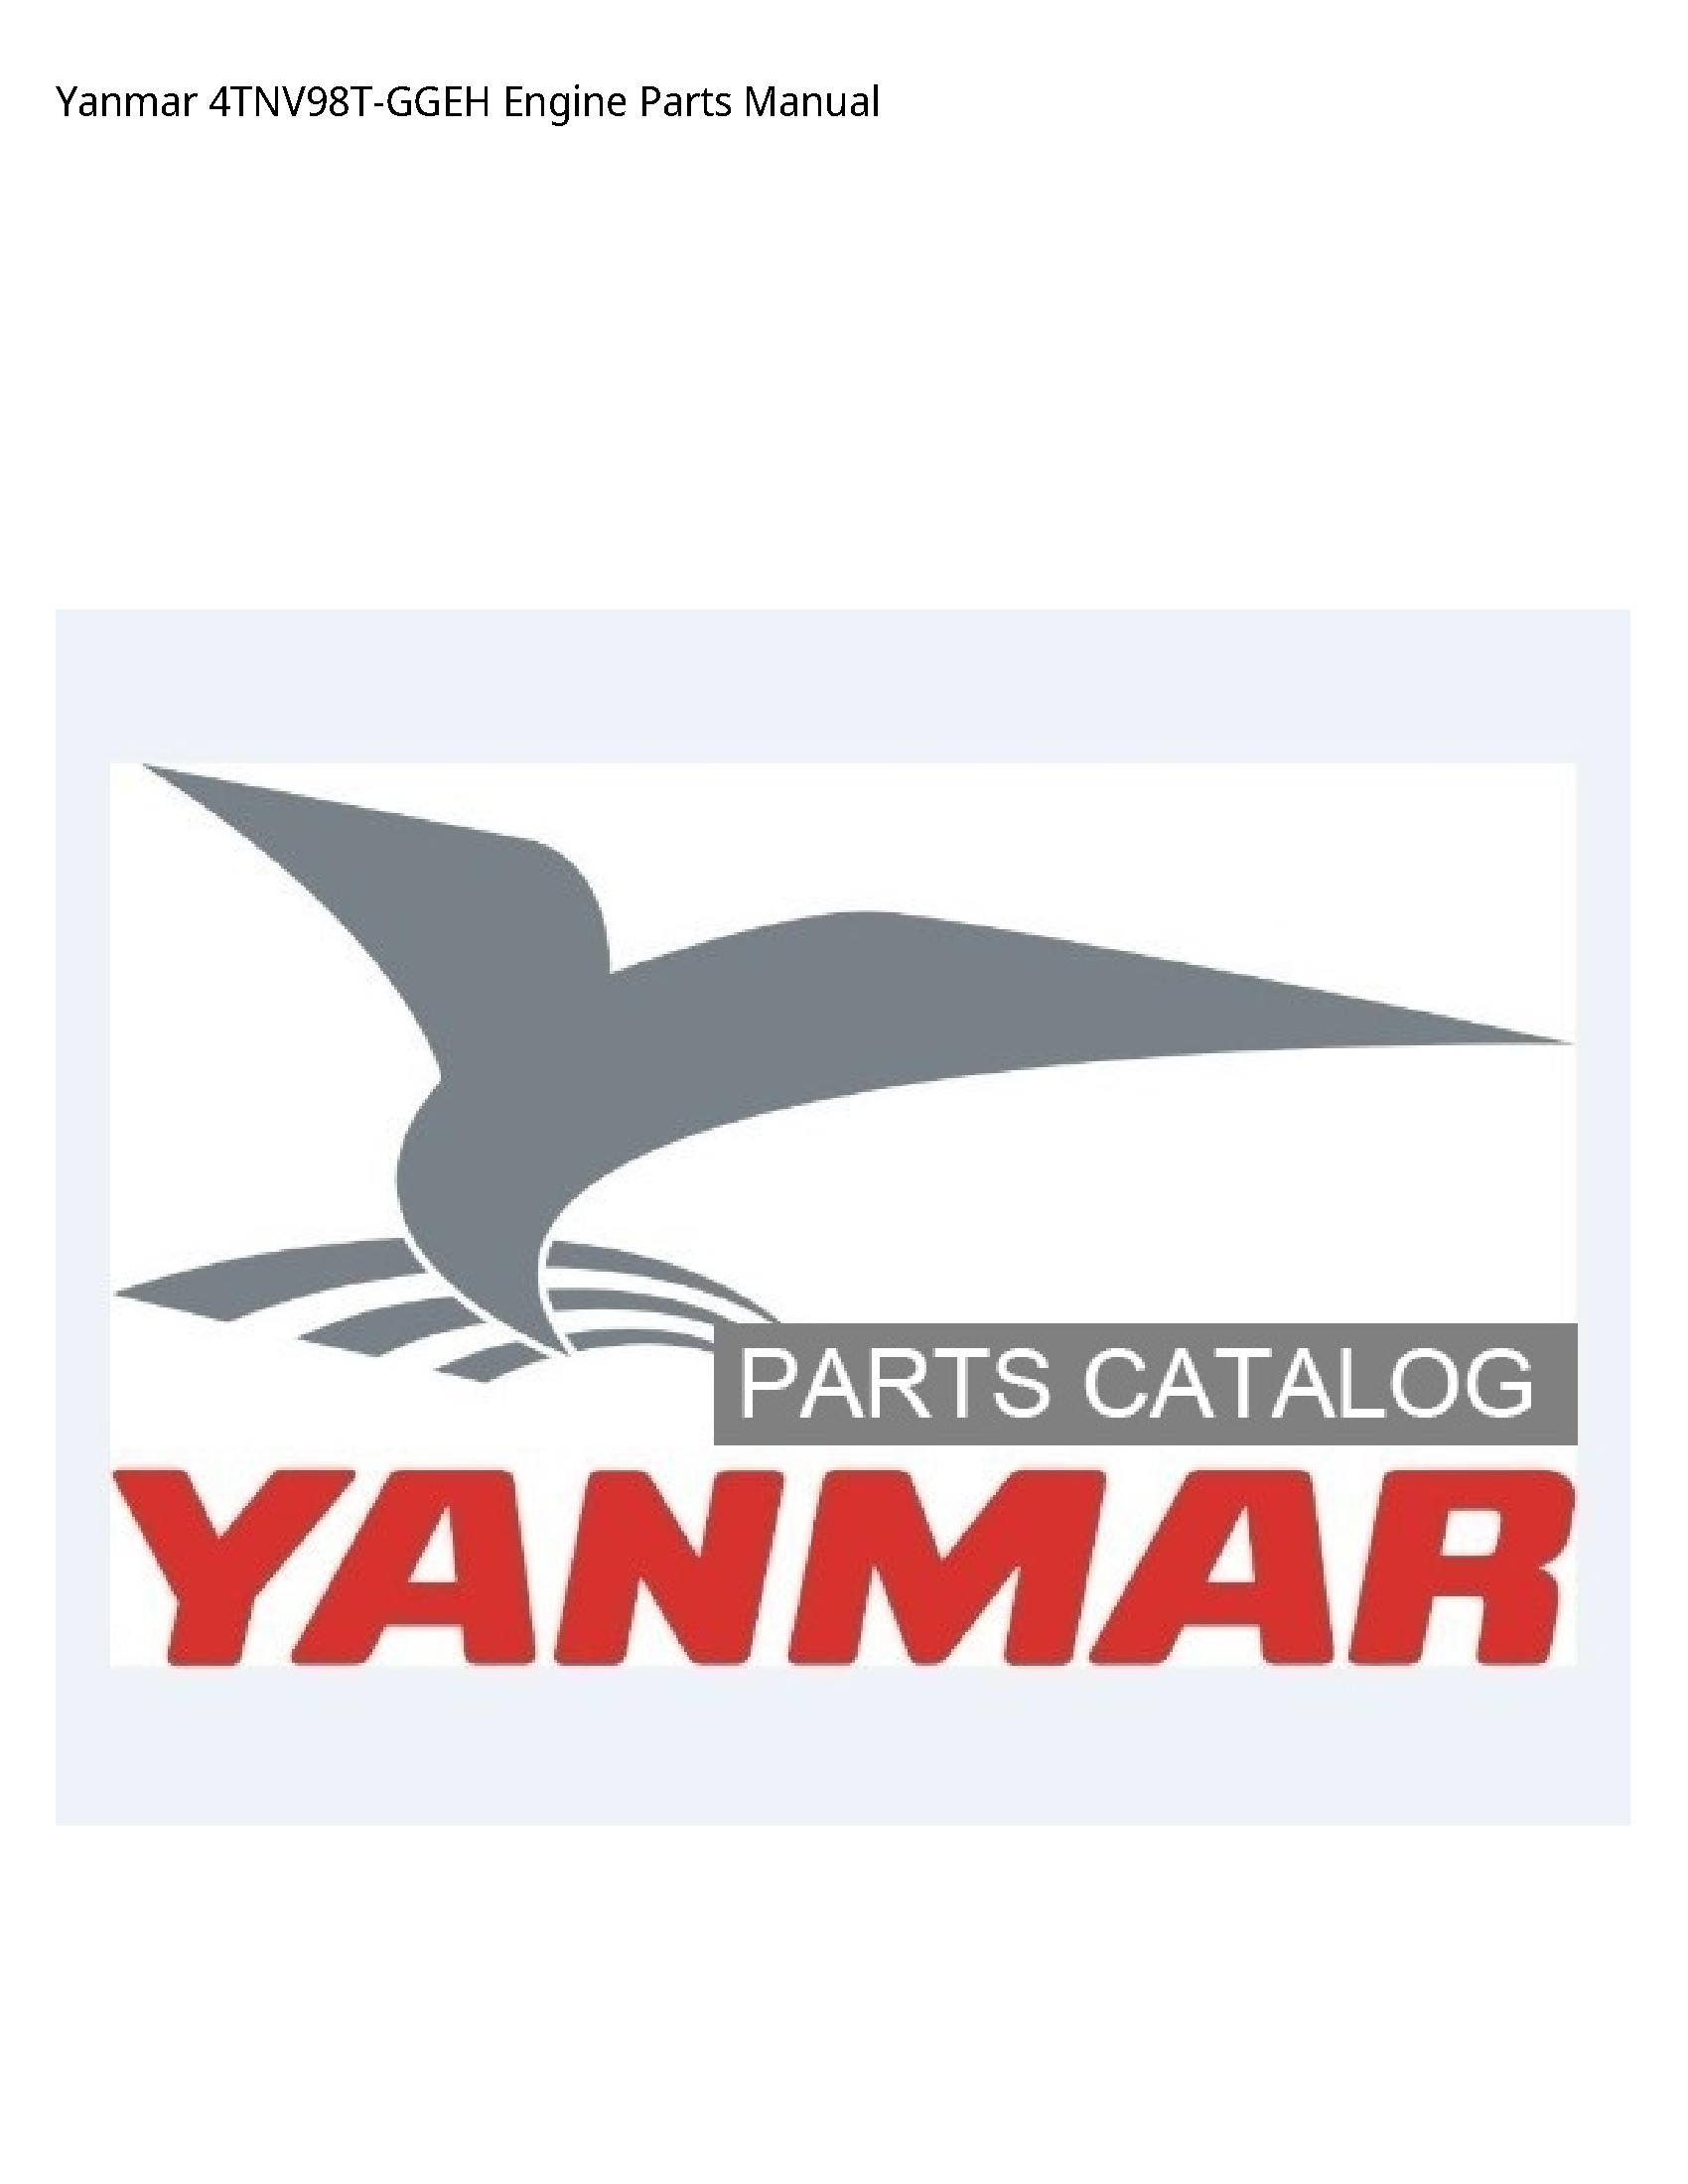 Yanmar 4TNV98T-GGEH Engine Parts manual